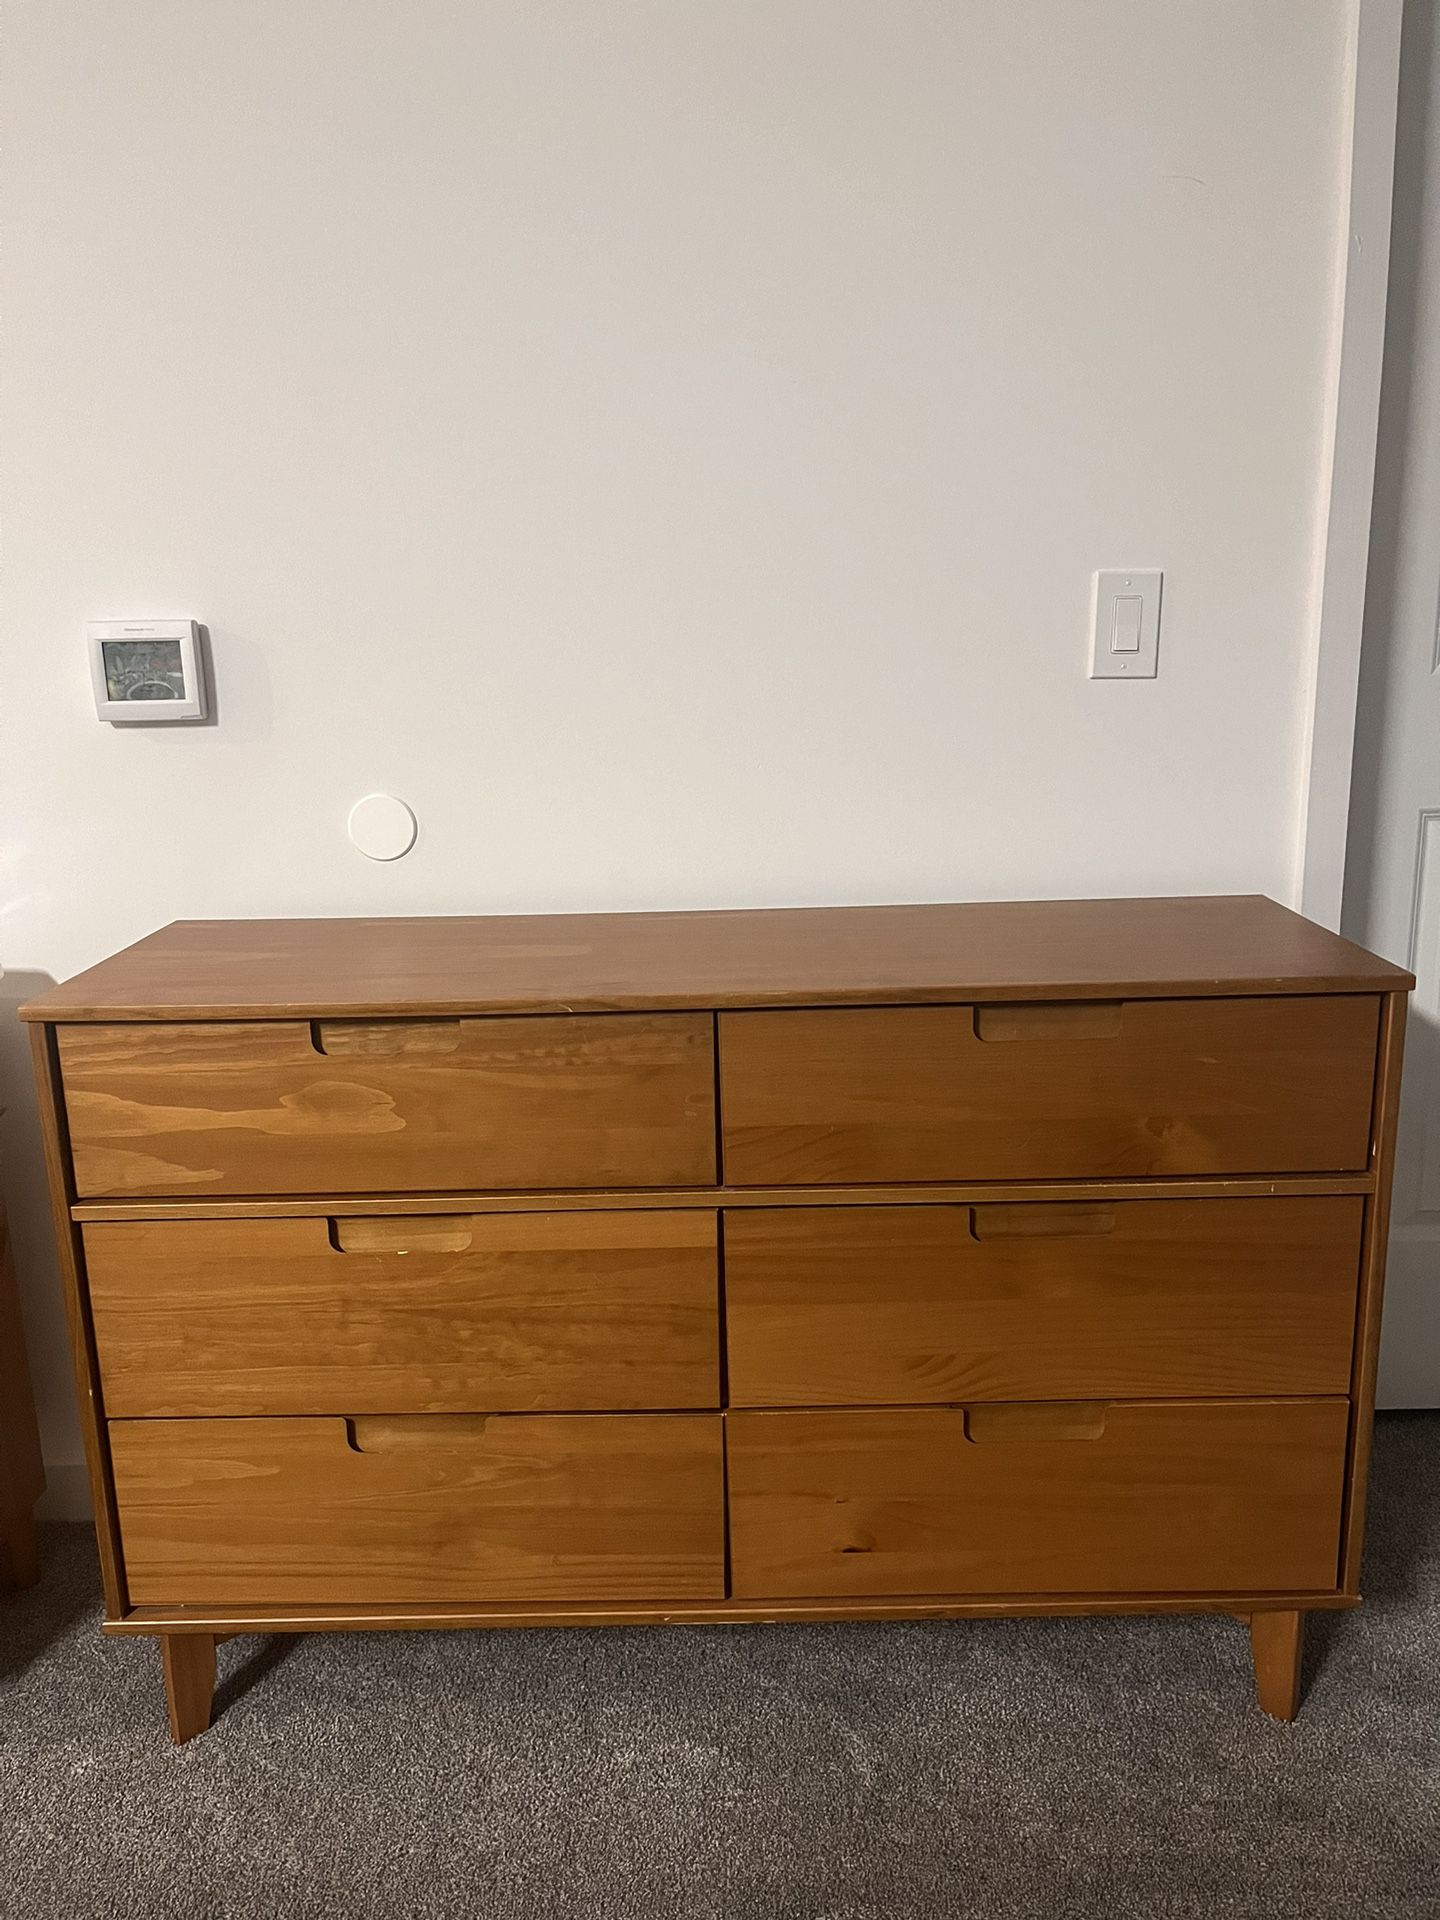 Handle Wood Dresser Bedroom Storage Drawer Organizer